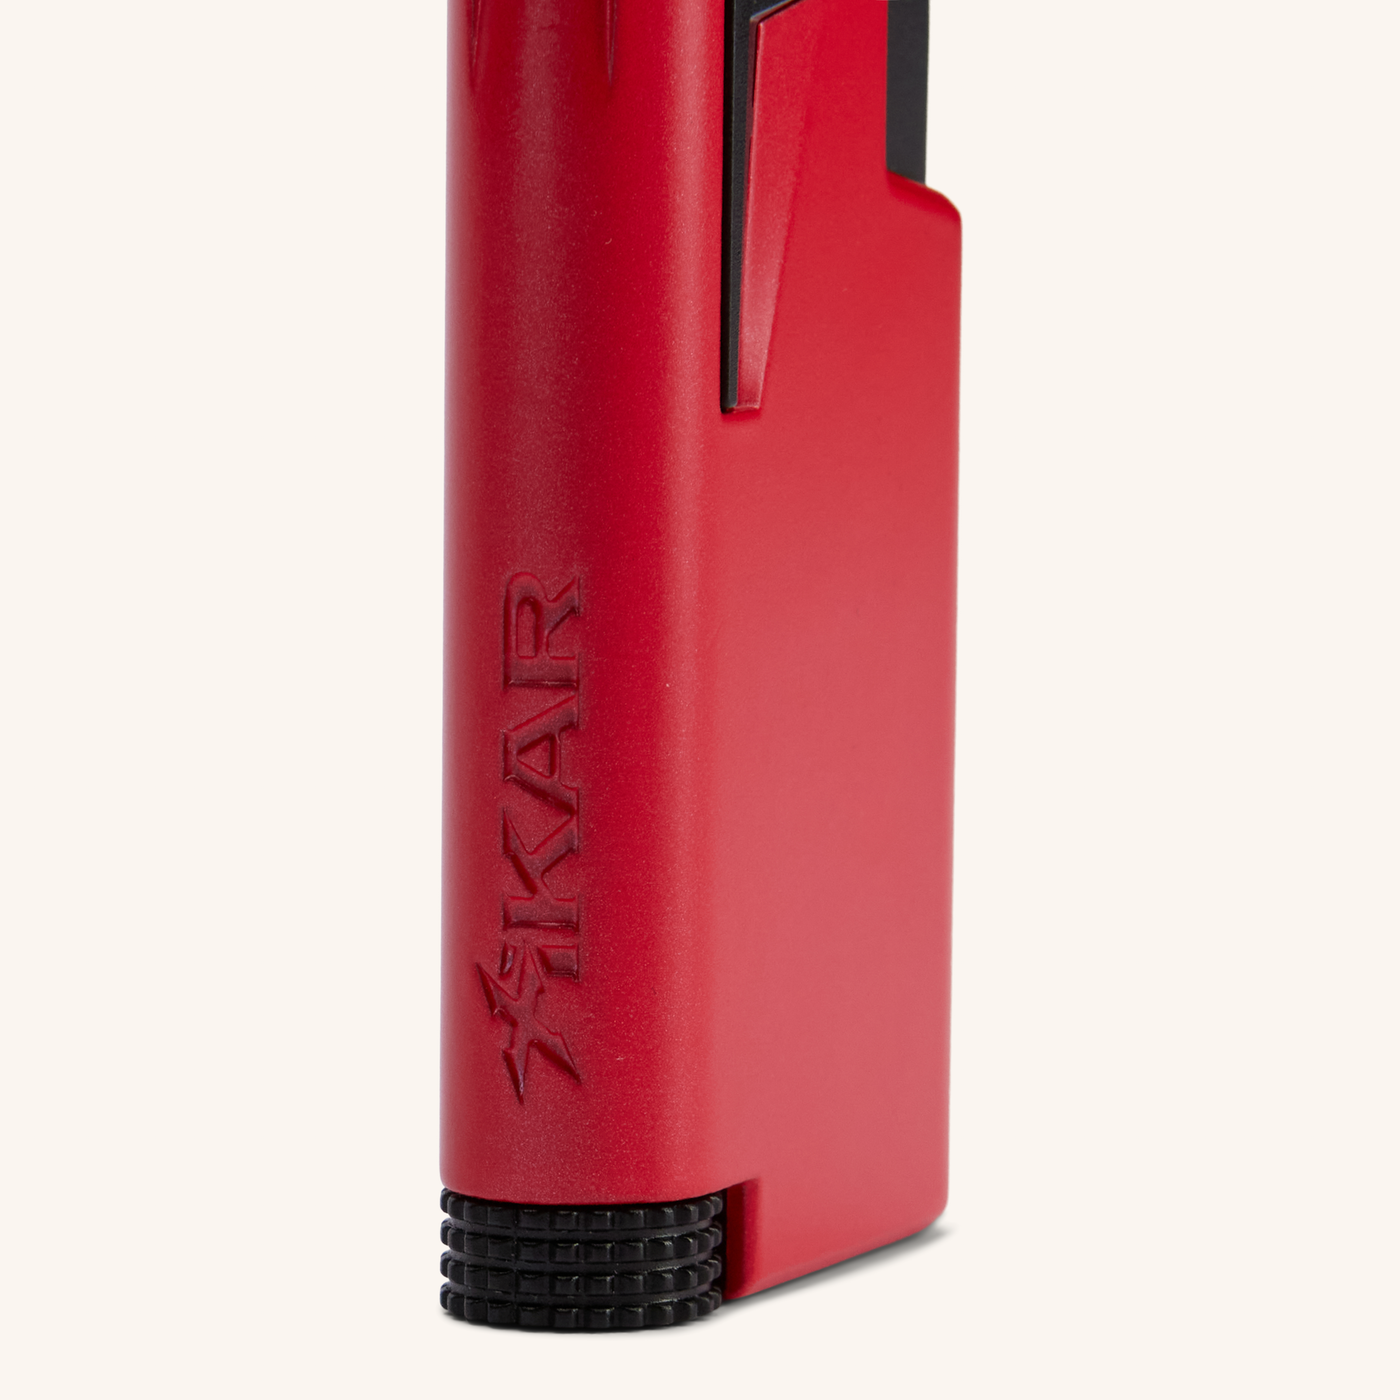 Xikar XK1 Single Jet Flame Lighter Red